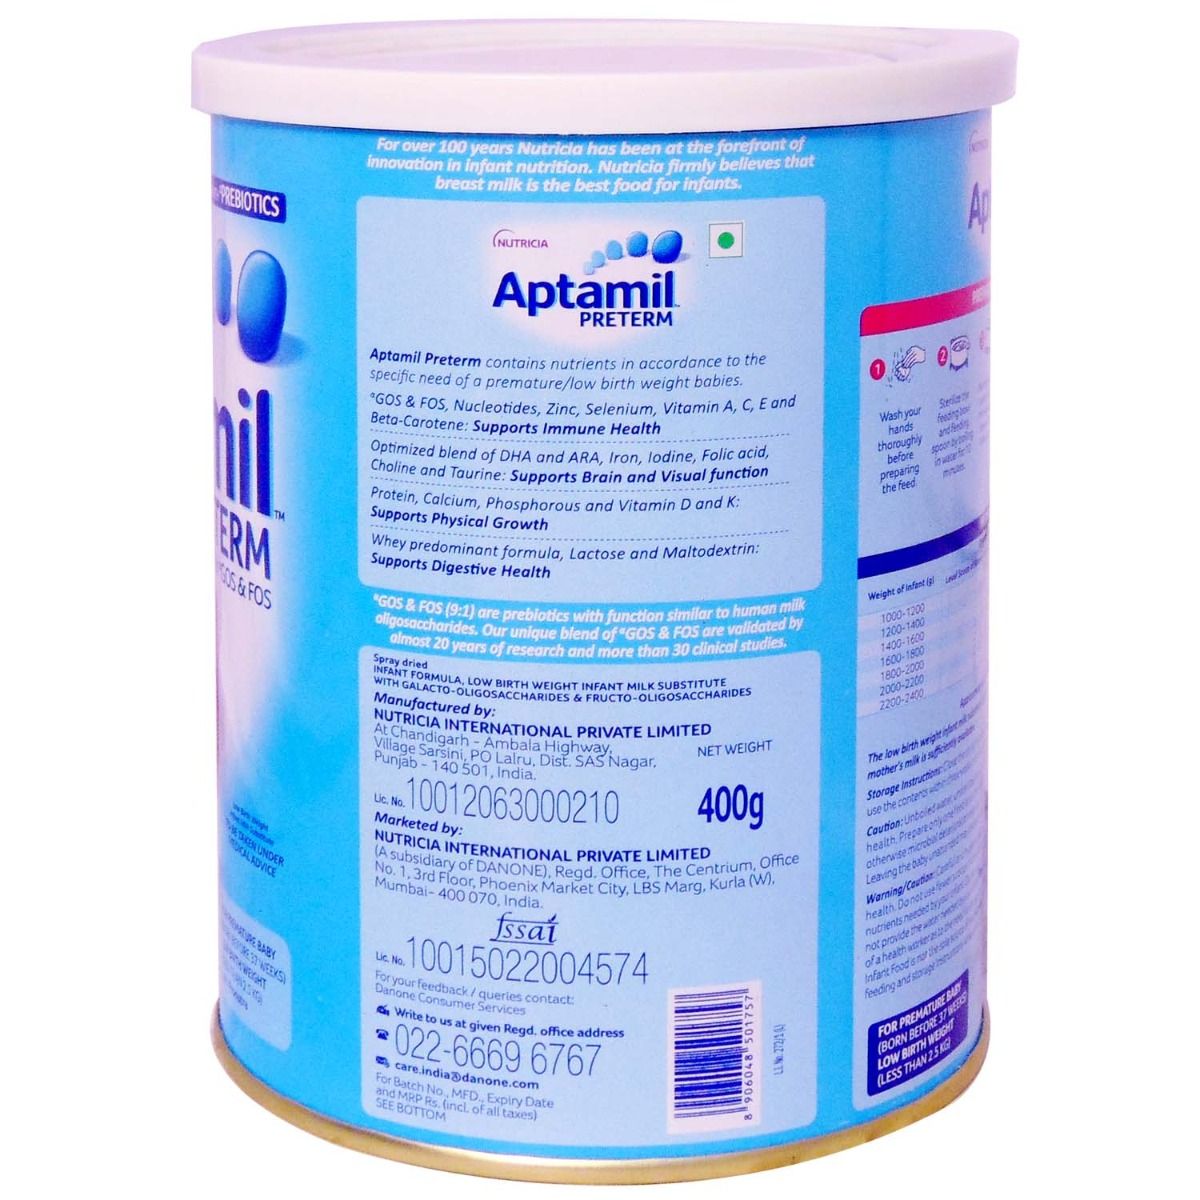 Aptamil Preterm Infant Formula, 400 gm Tin, Pack of 1 